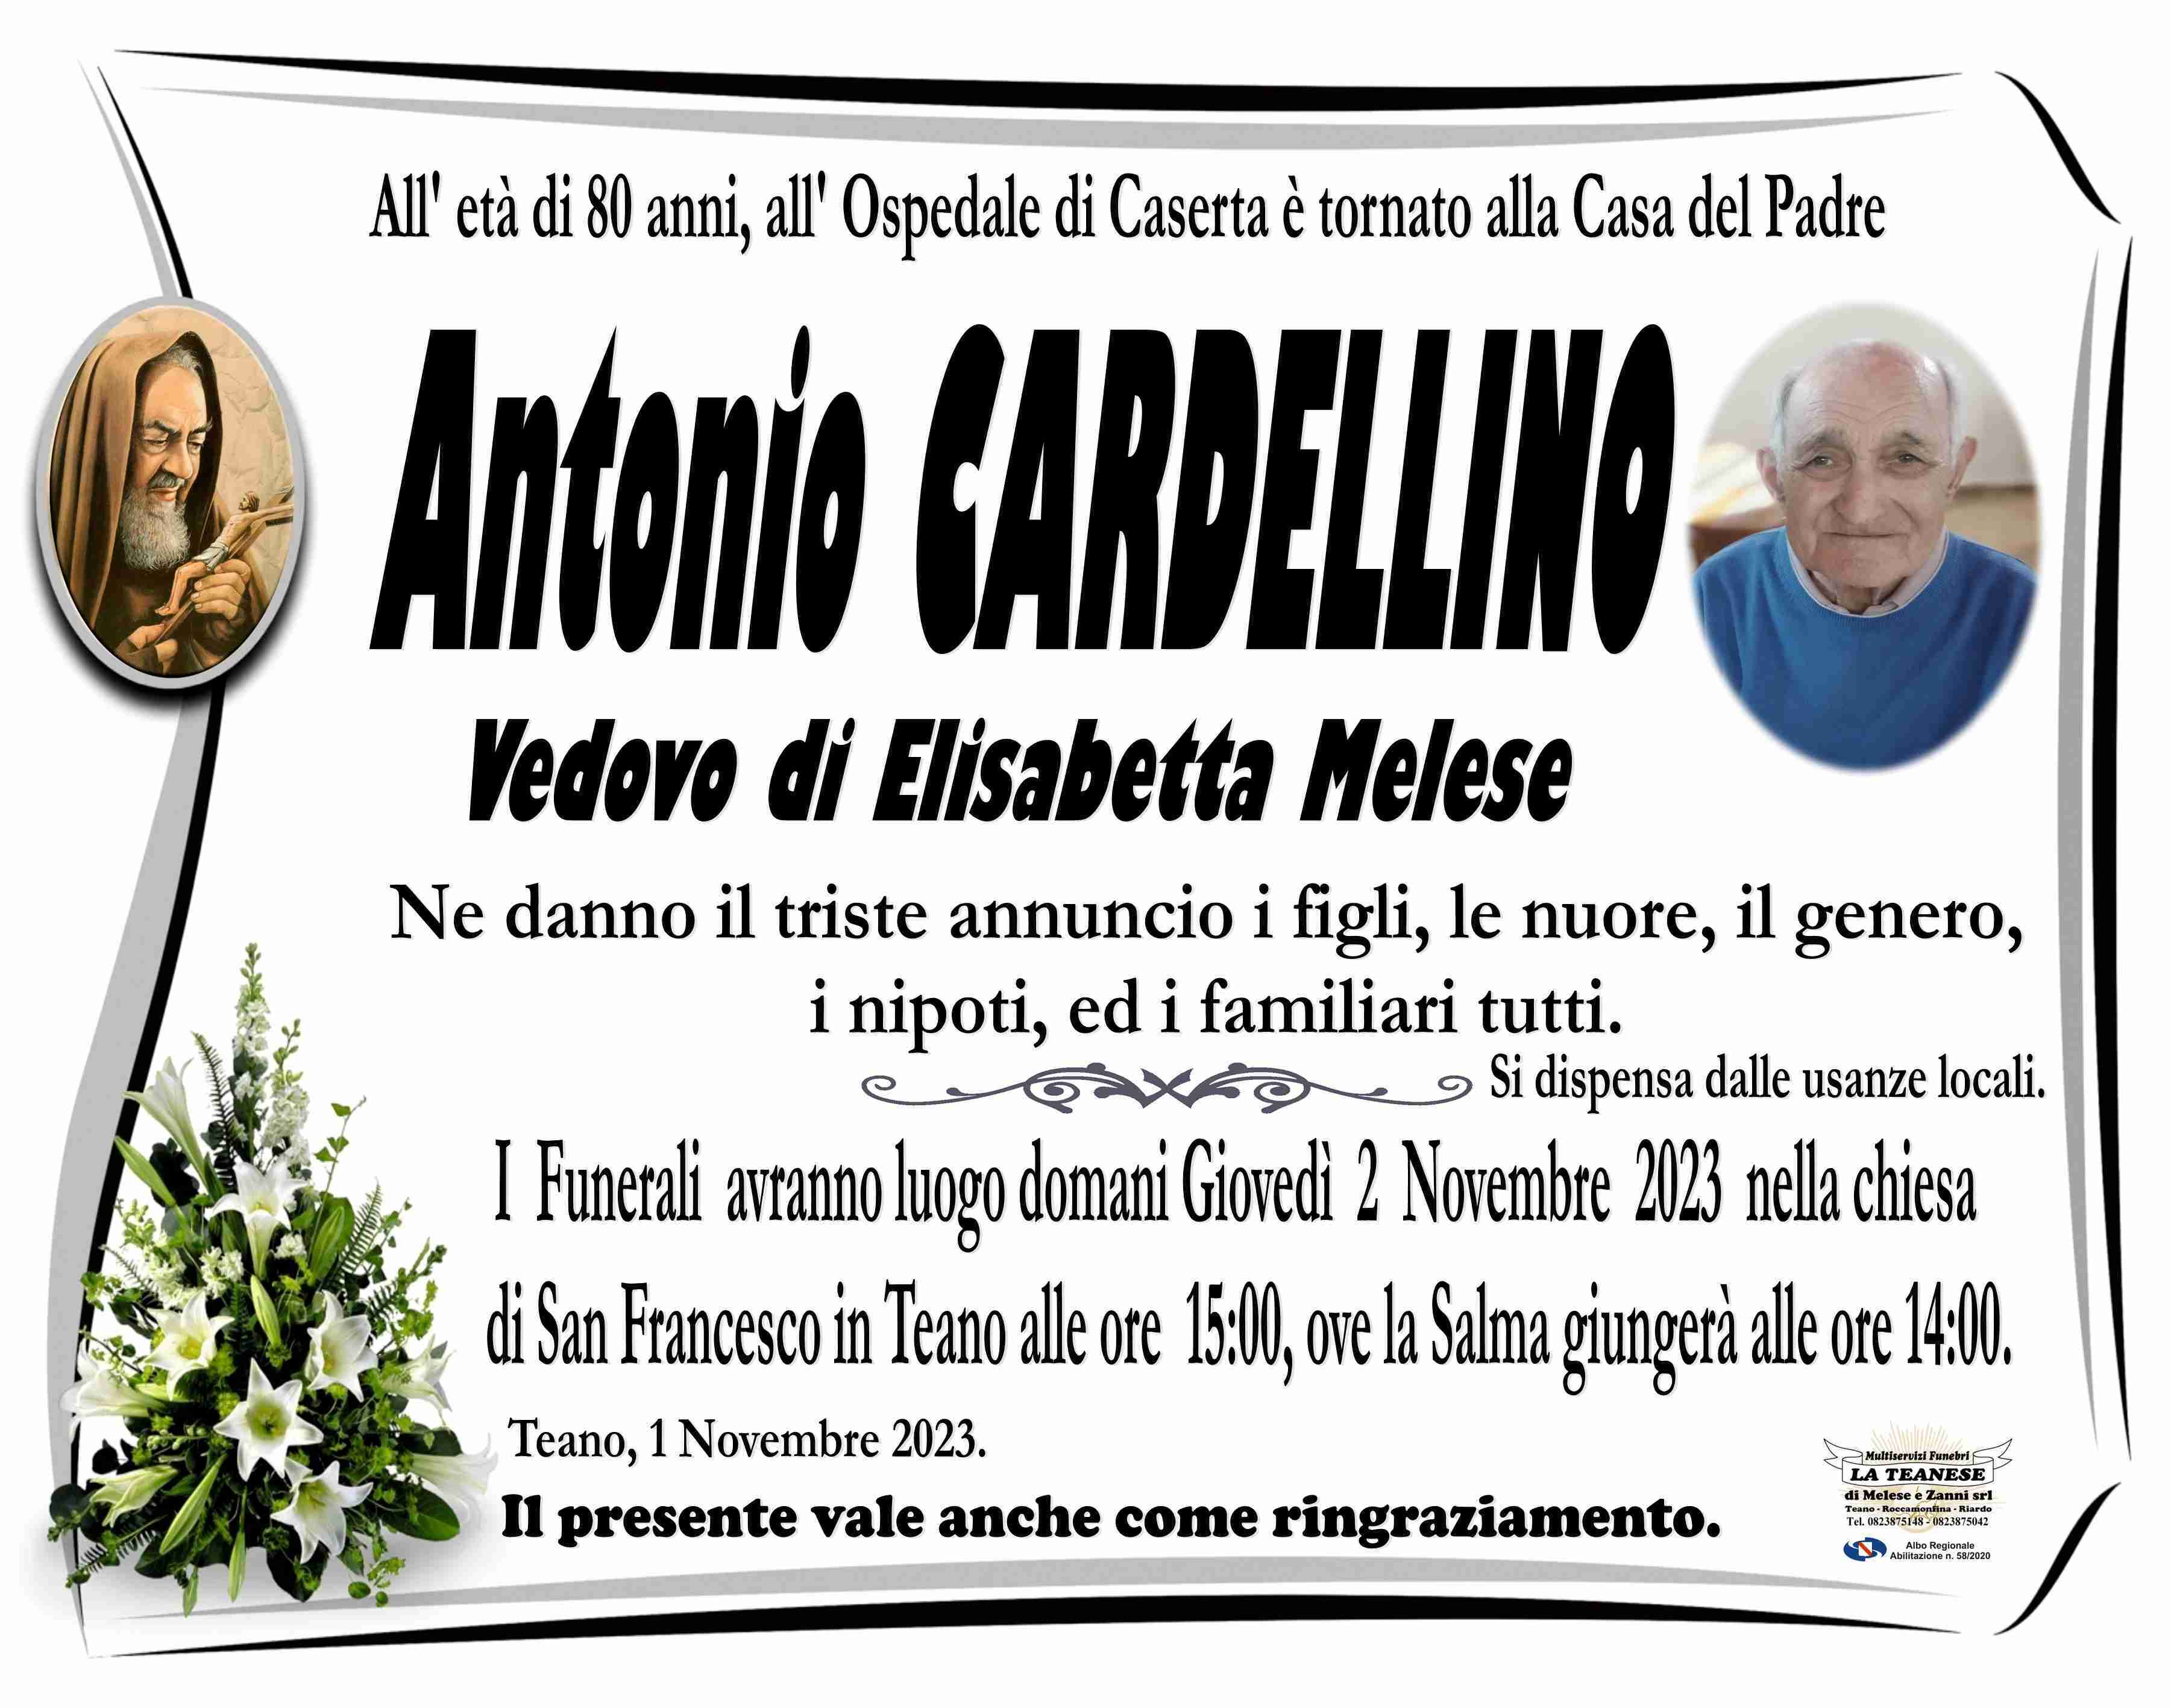 Antonio Cardellino